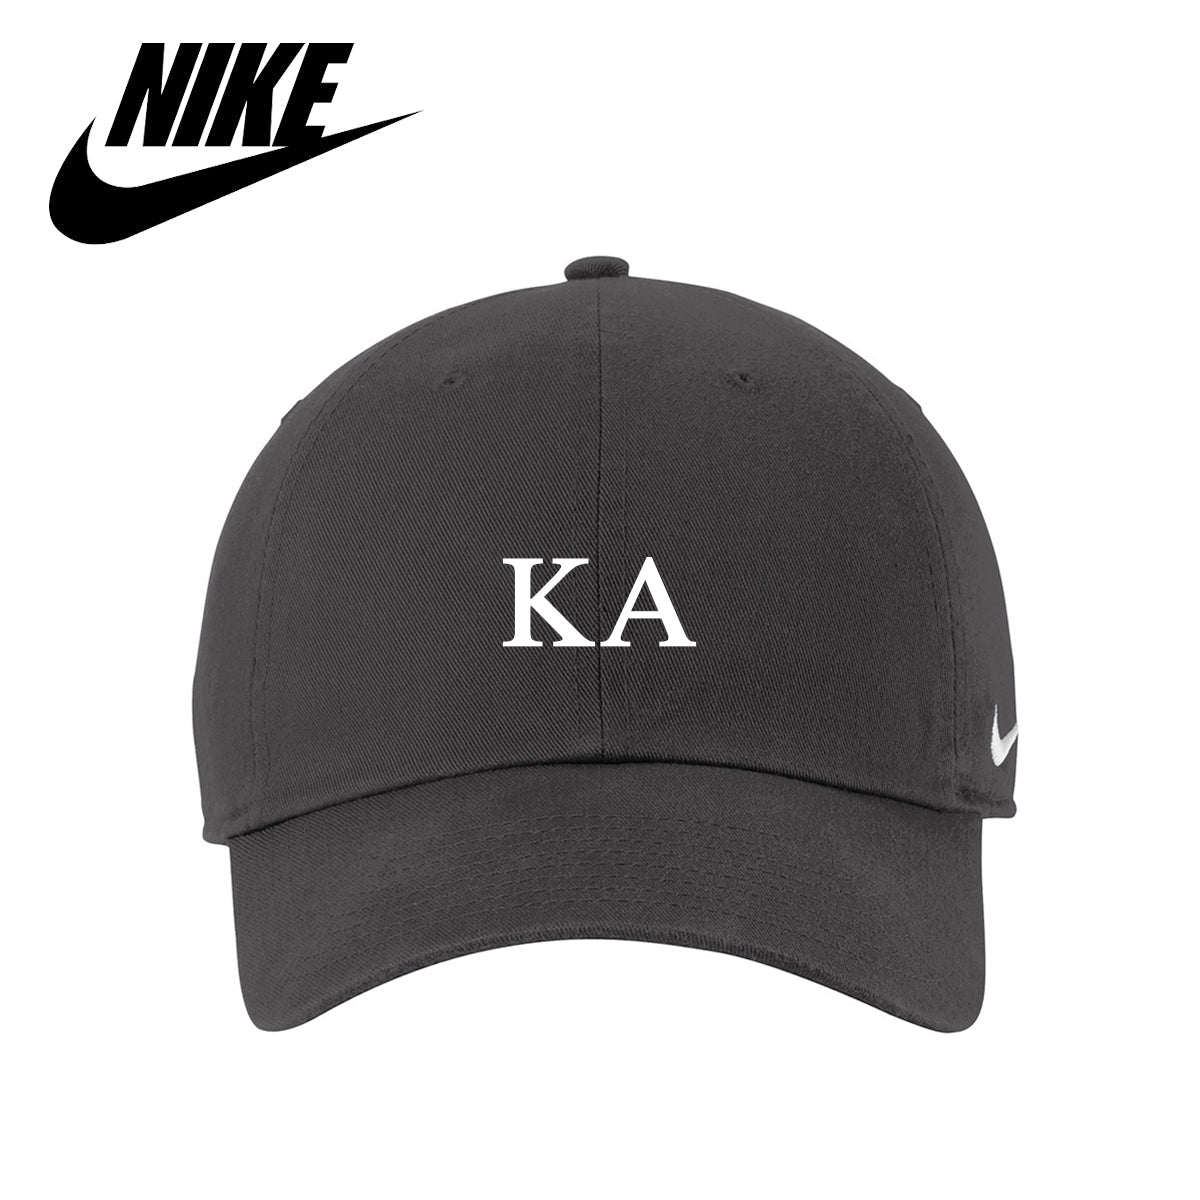 Kappa Alpha Nike Heritage Hat With Greek Letters – Kappa Alpha Order ...